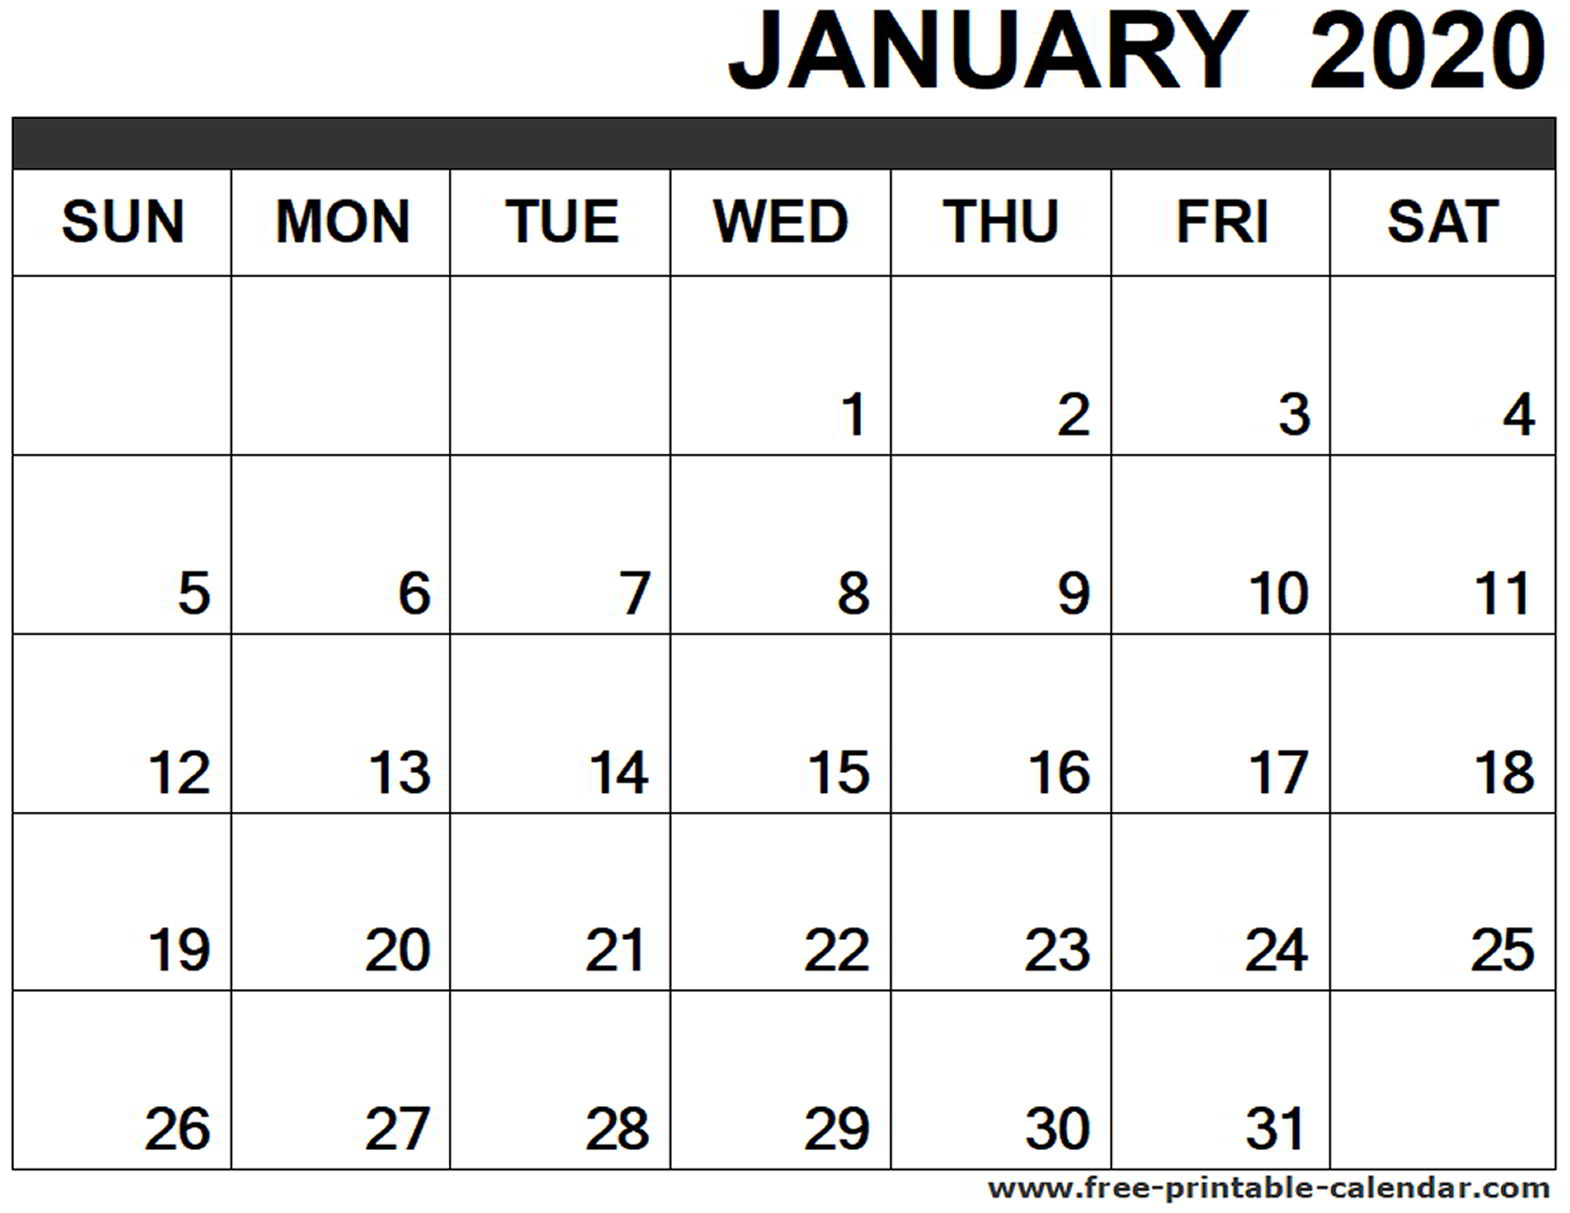 January 2020 Calendar Printable - Free-Printable-Calendar